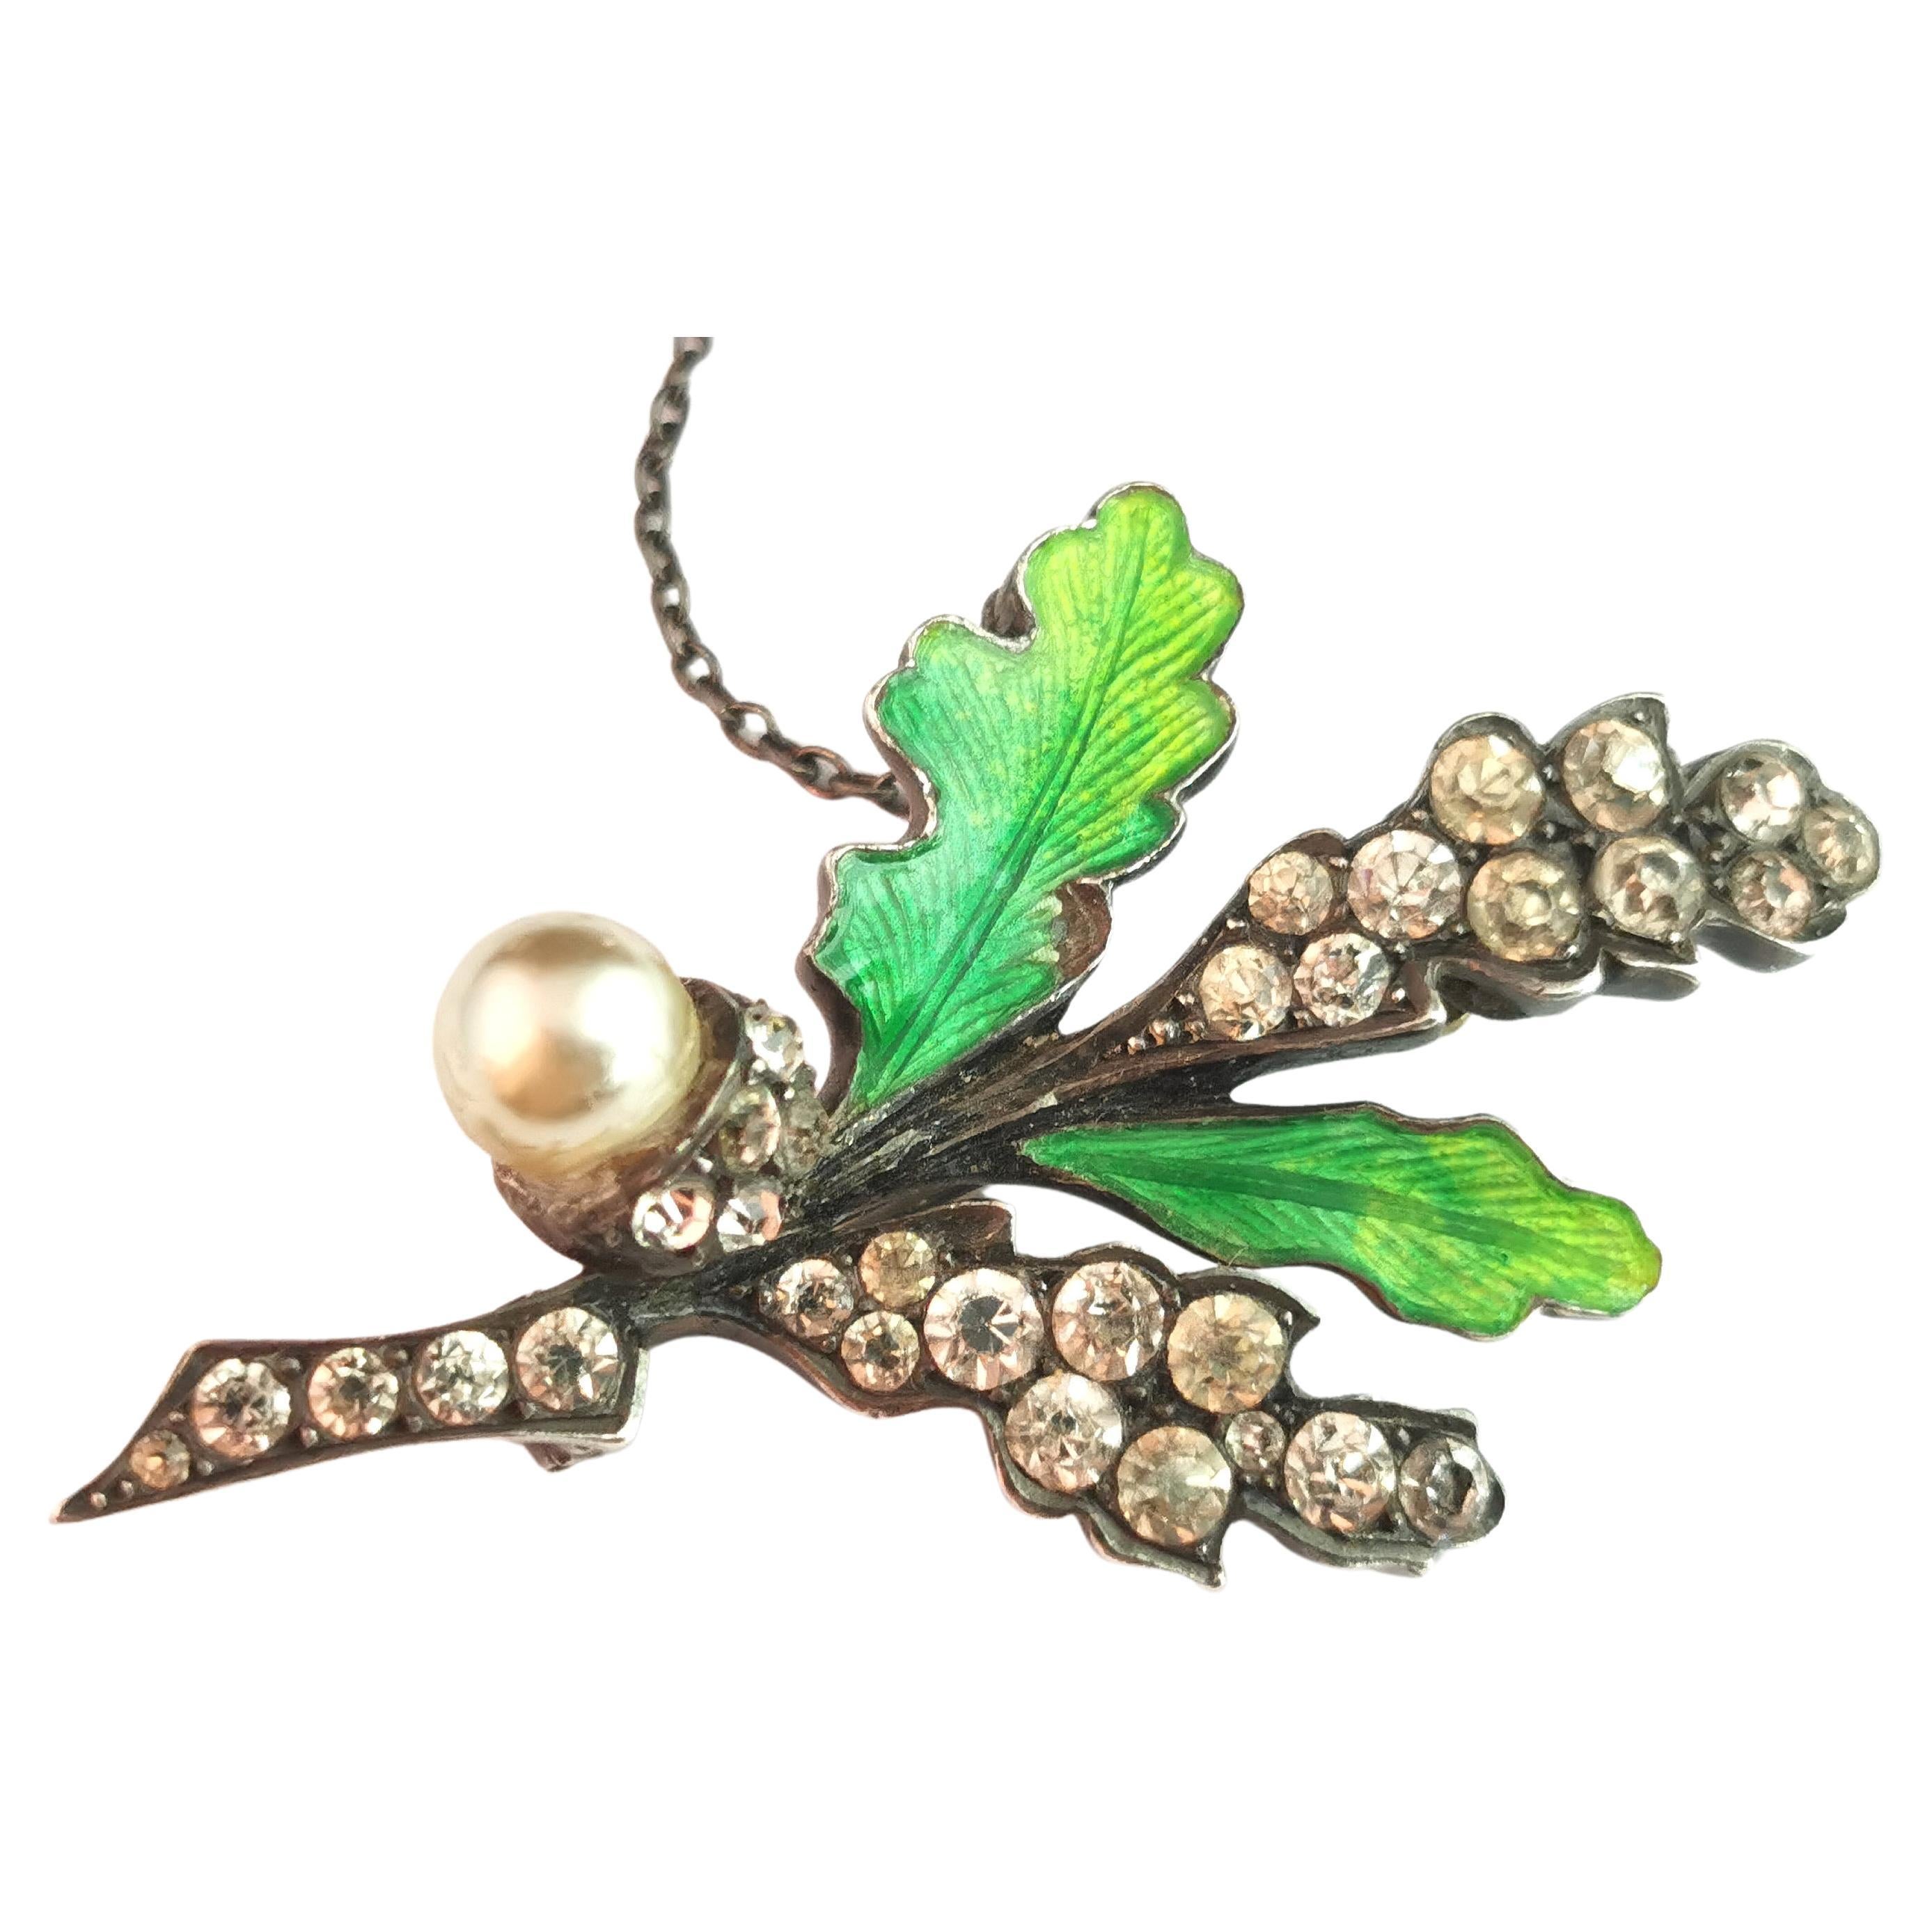 Antique Acorn and Oak Leaf Brooch, Sterling Silver, Enamel and Paste